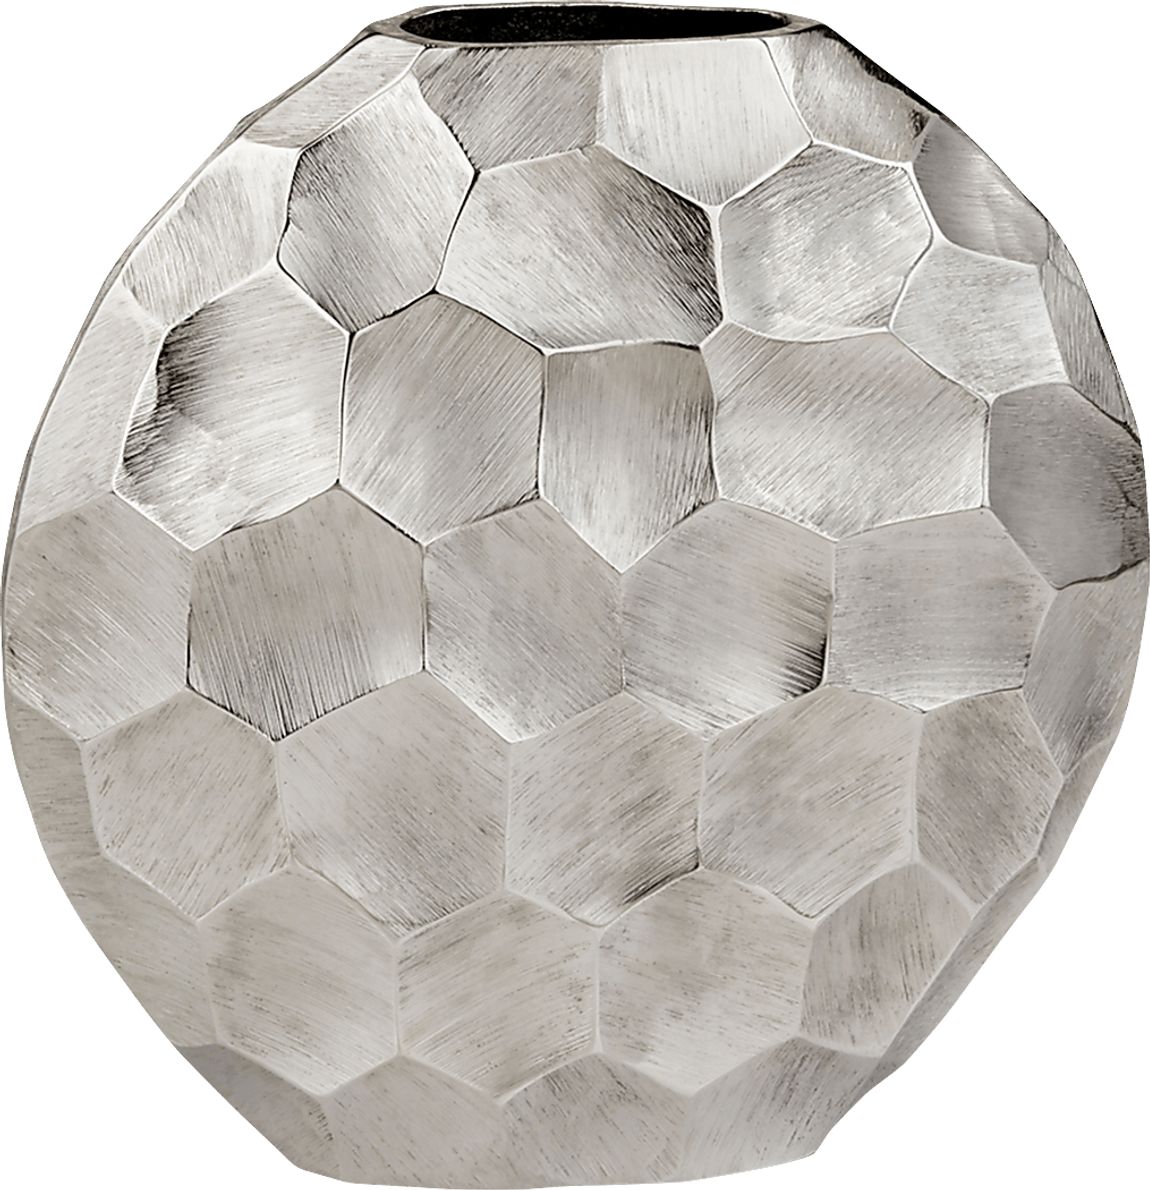 Shadony Silver Vase